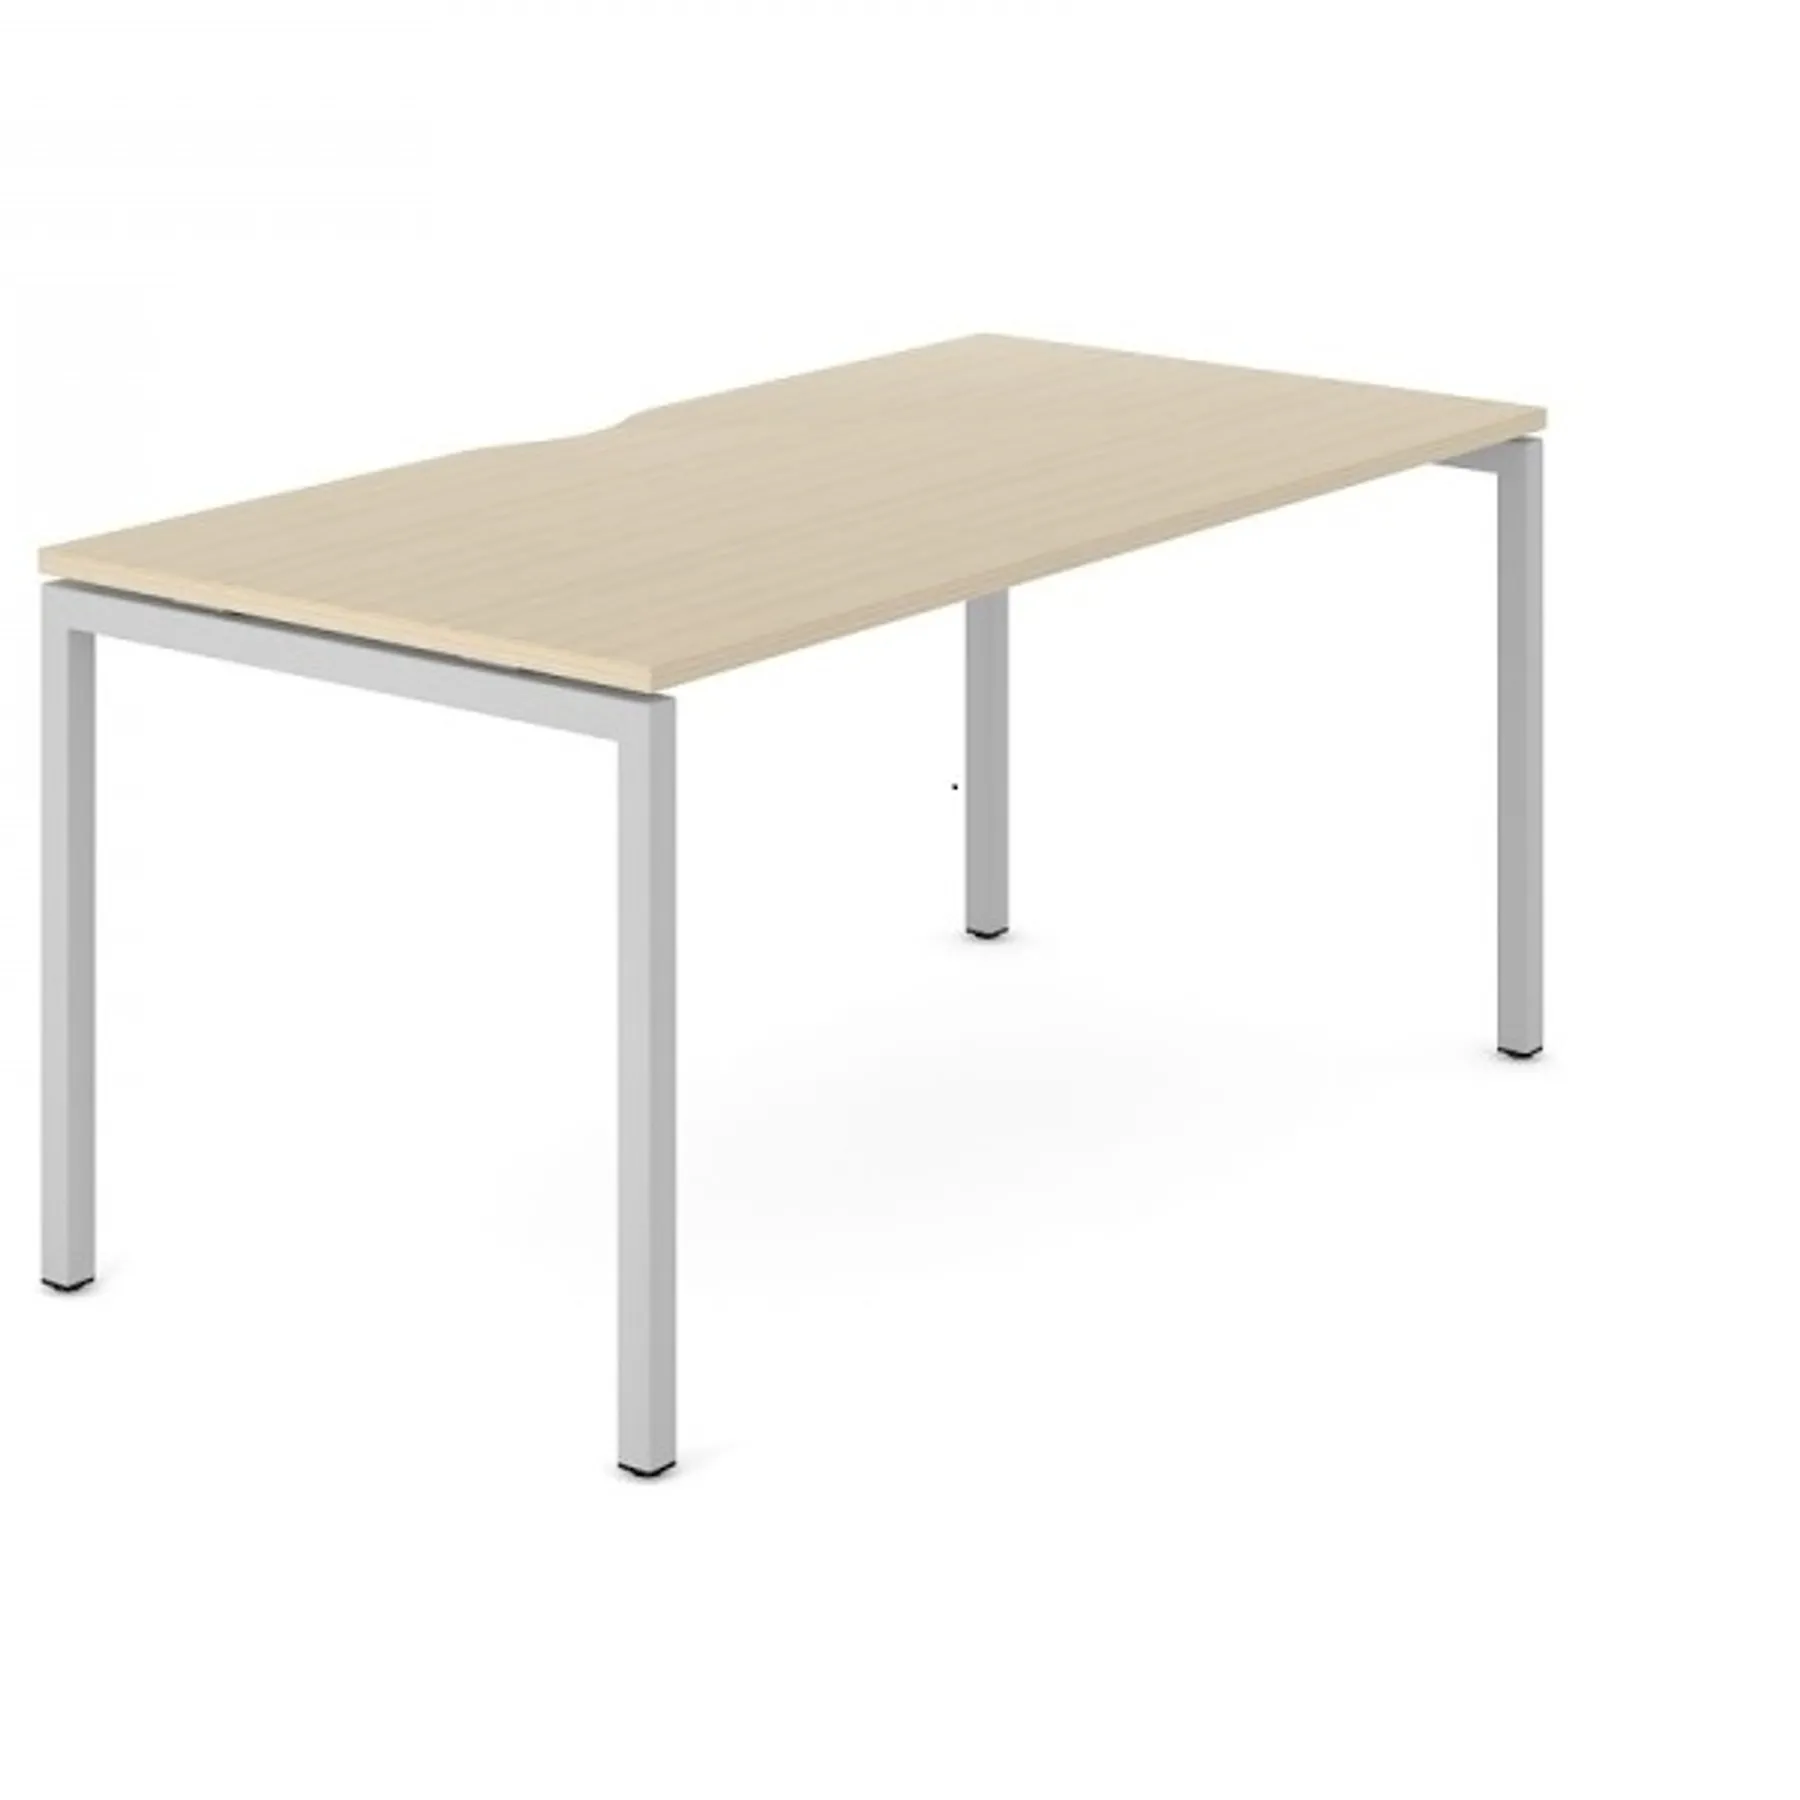 Lof Direct narbutas nova single starter bench desk DND128 U 003 jpgresize